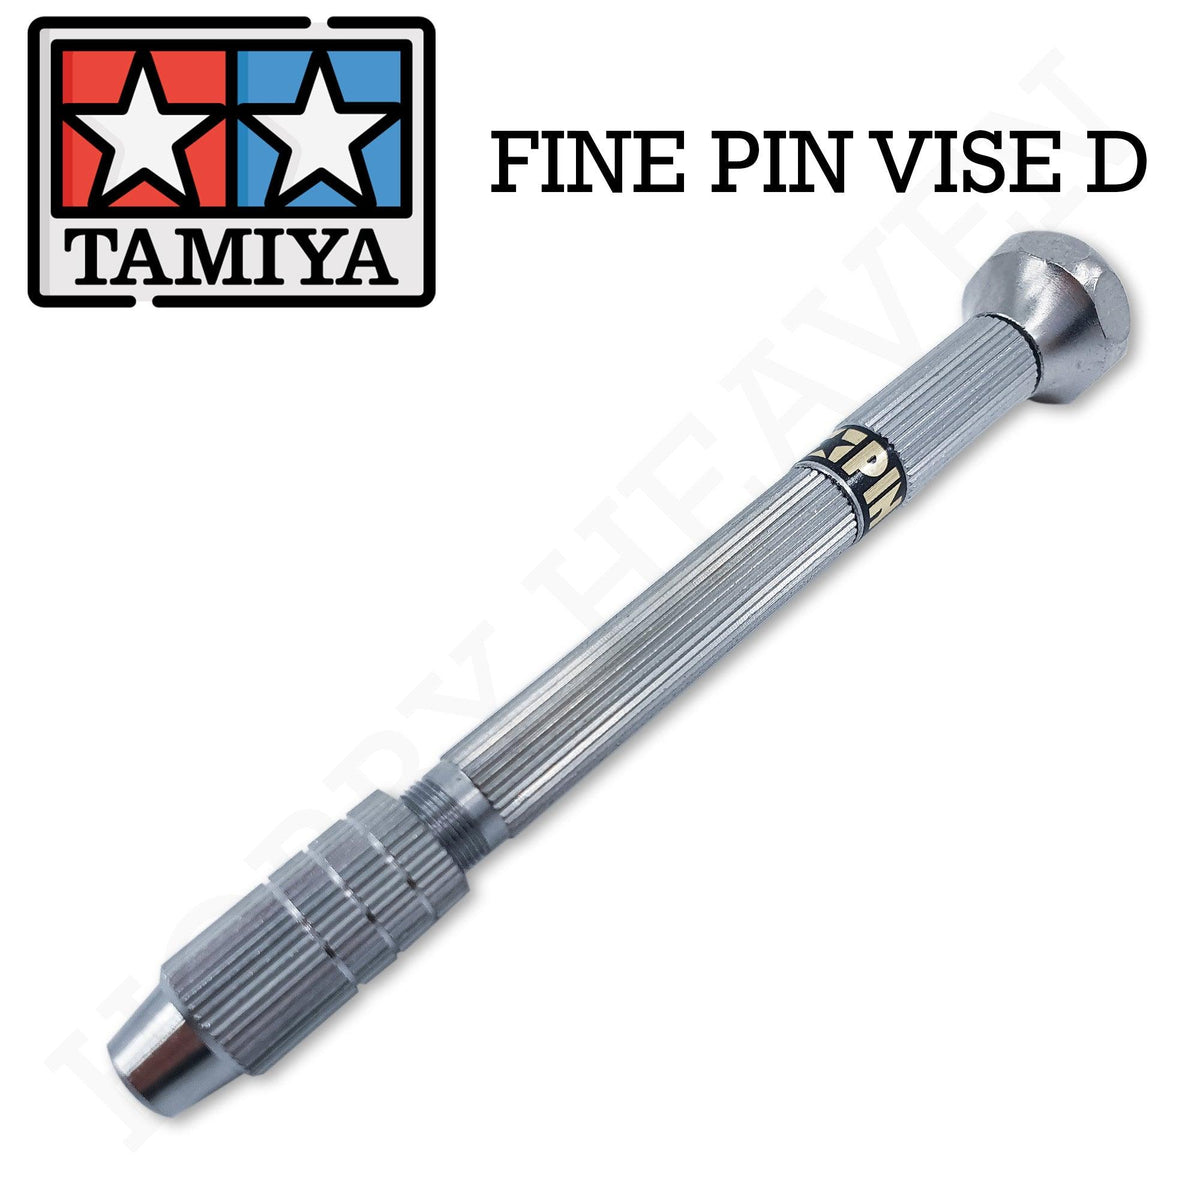 Tamiya Fine Pin Vise D 74050